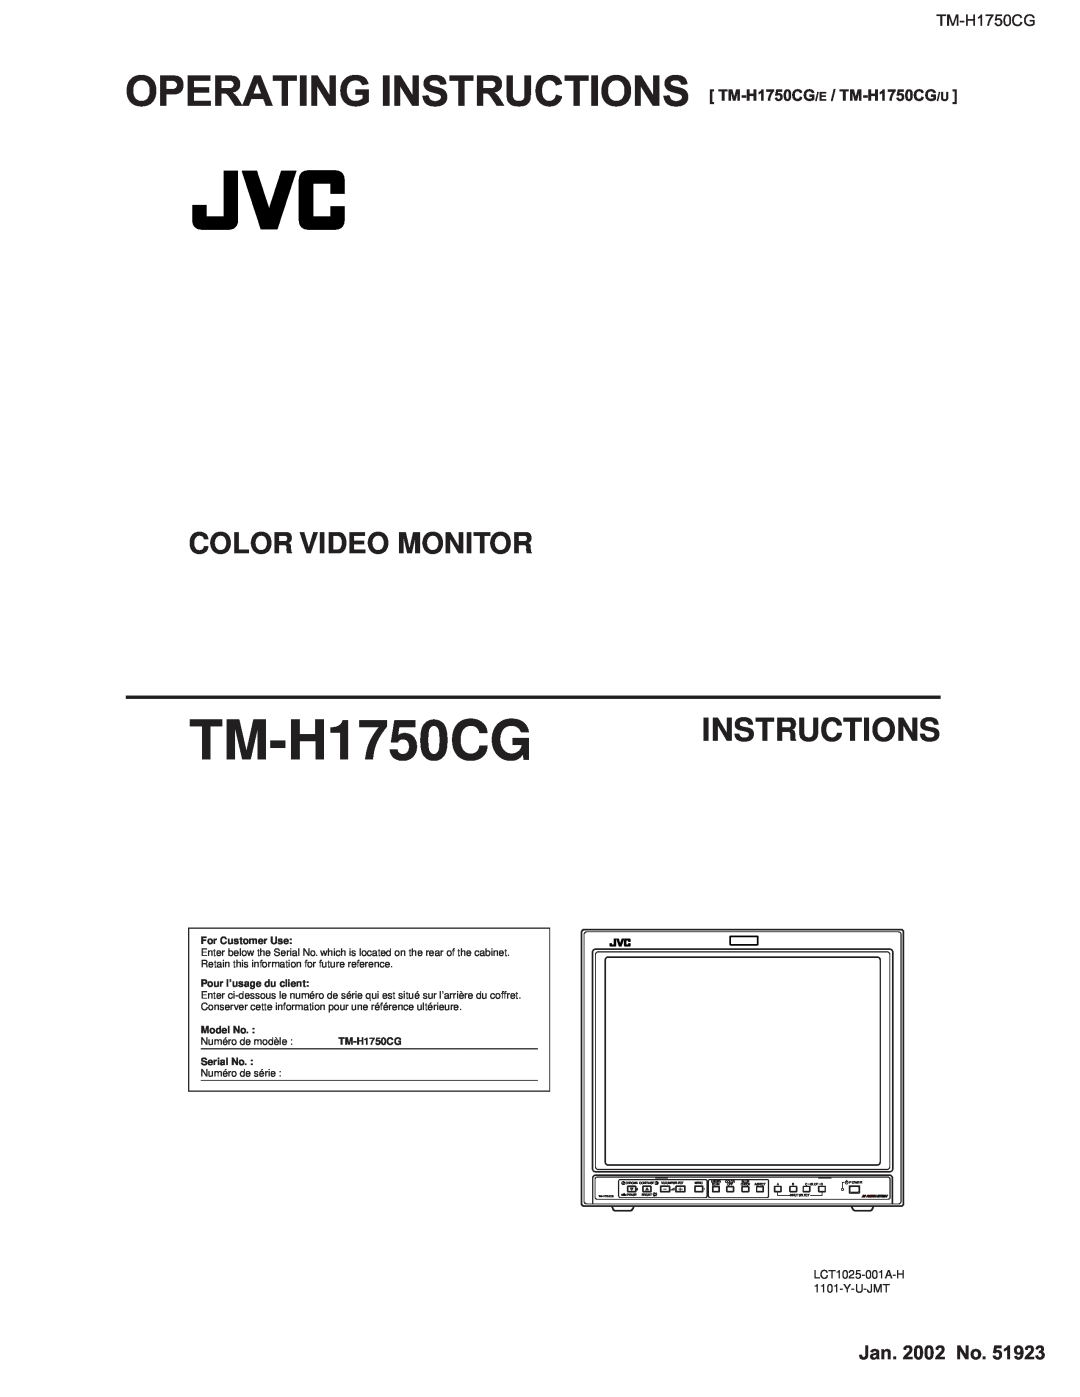 JVC operating instructions TM-H1750CG OPERATING INSTRUCTIONS TM-H1750CG/E / TM-H1750CG/U, Instructions, Jan. 2002 No 